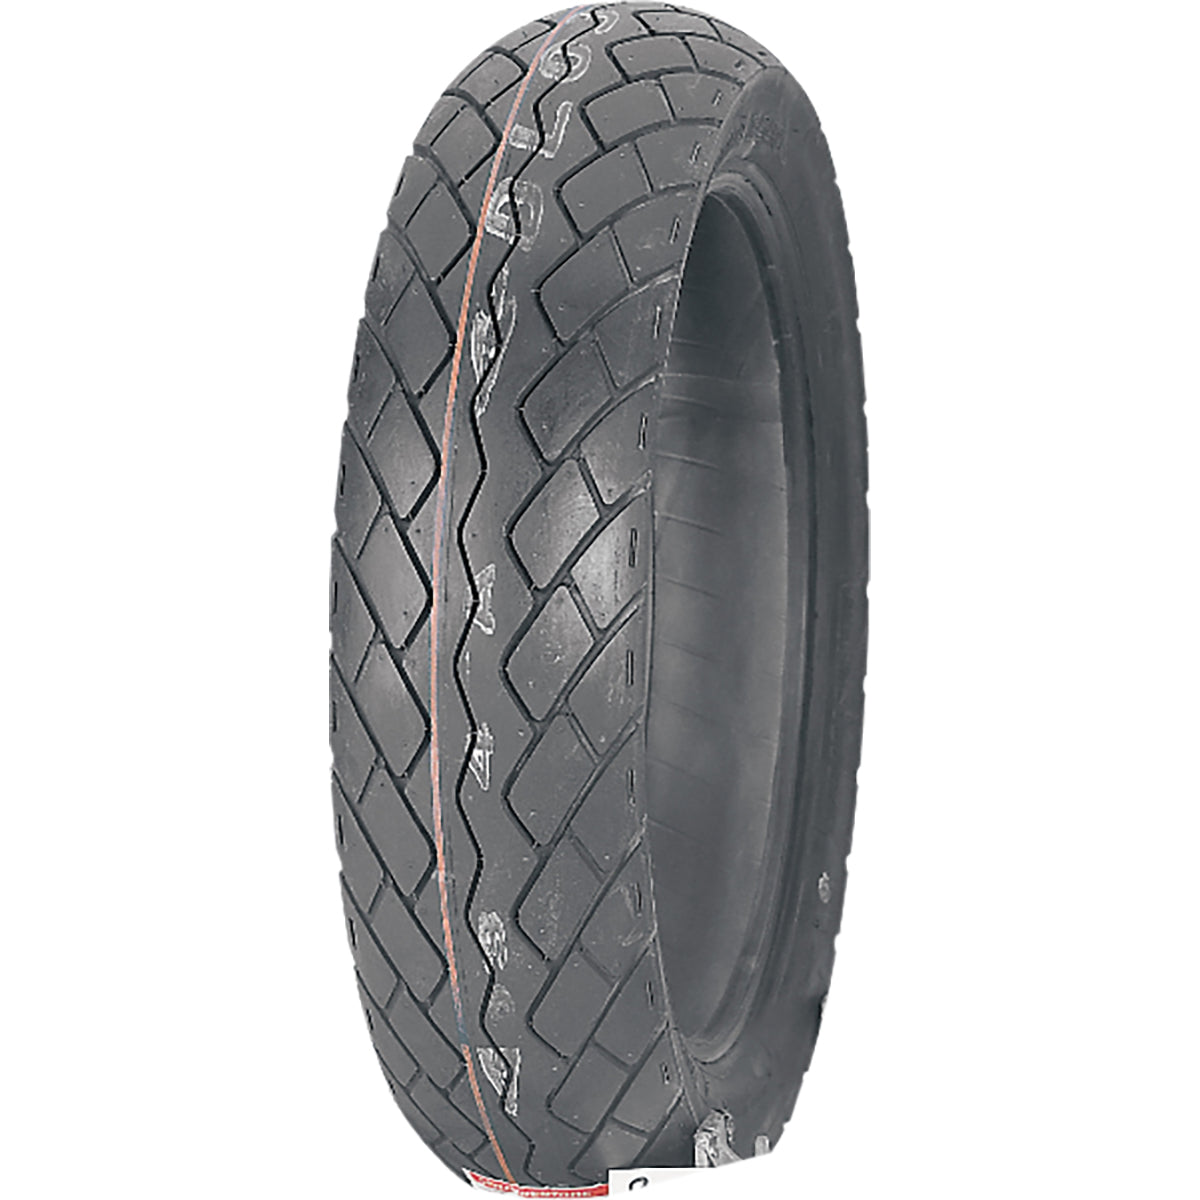 Bridgestone Exedra G-Series 17" Rear Cruiser Tires